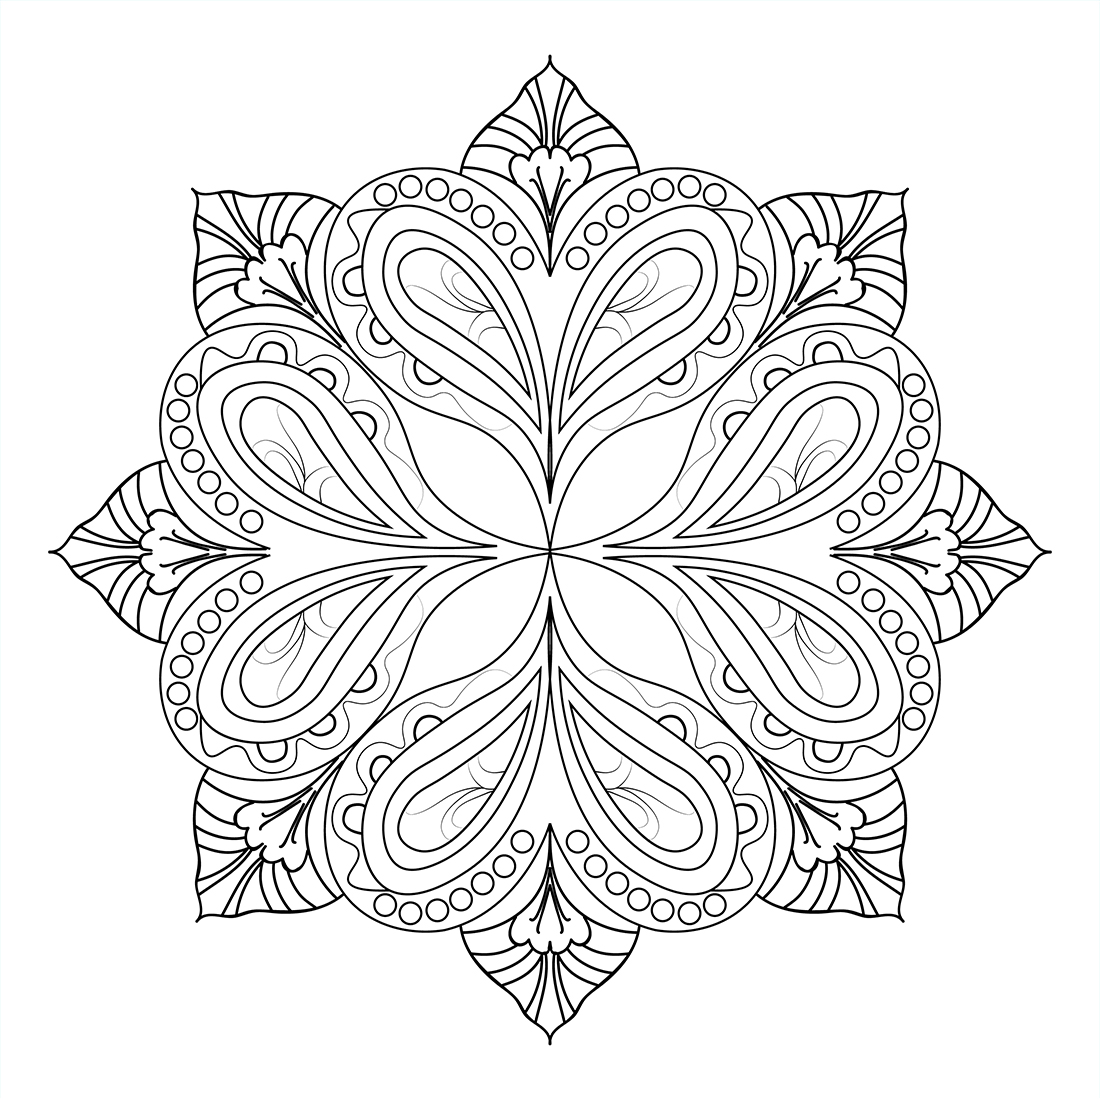 How to Draw a Mandala Art Design ~ ArtyArsh -Creative World